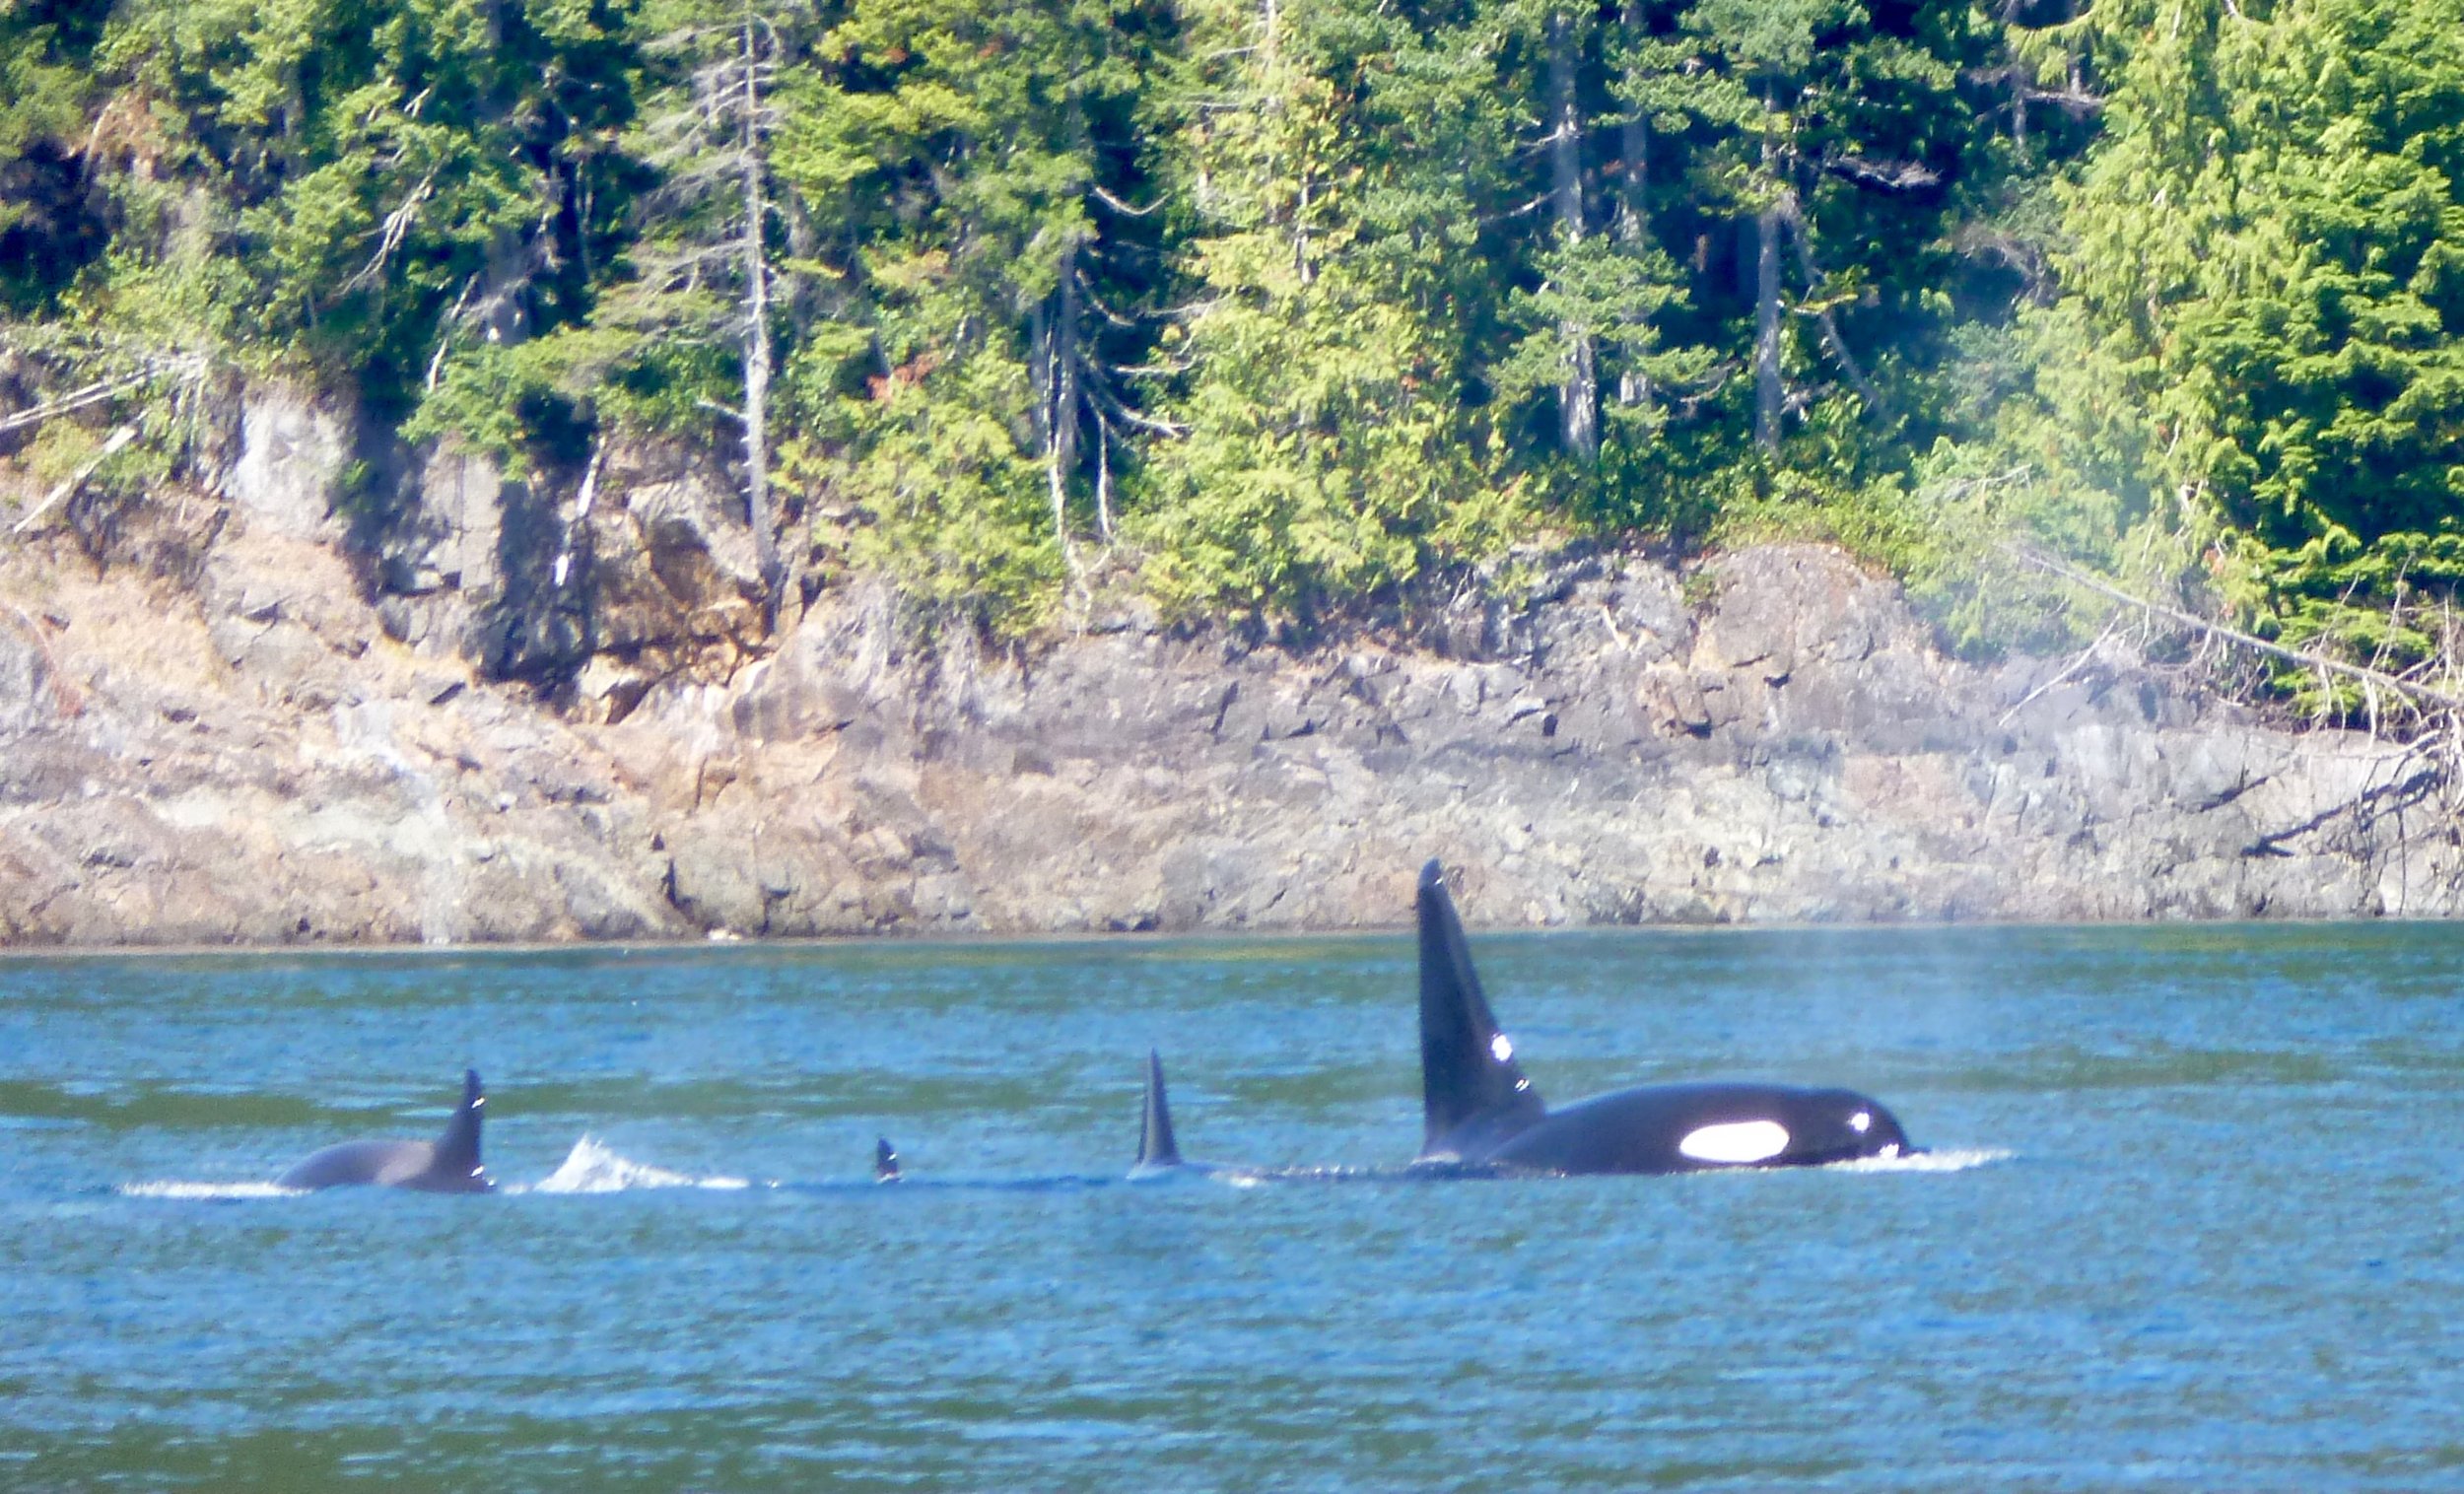 Orca pod regularly visit